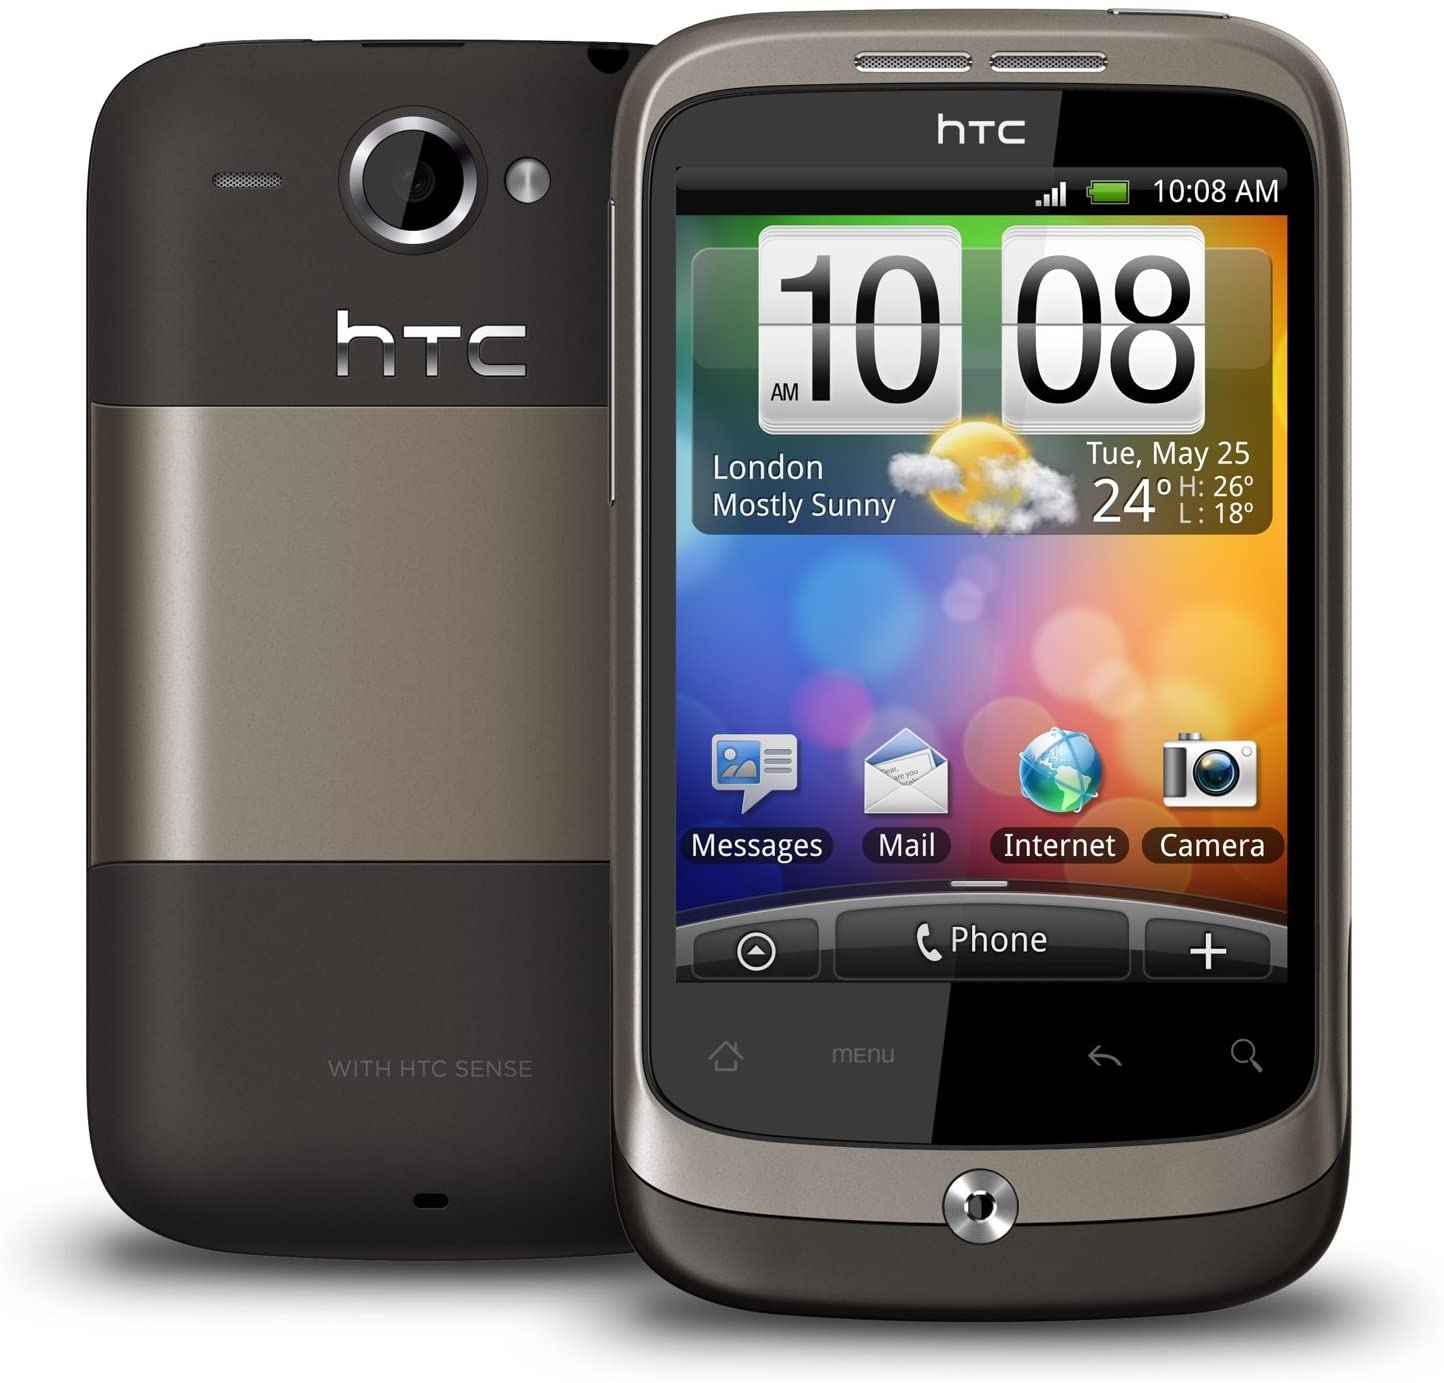 Zeestraat Donau Radioactief HTC A3333 Wildfire BUZZ Brown Unlocked Phone CPU: Snapdragon S1 | 384MB RAM  Screen: 3.2" | 240x320 pixels Camera: 5MP | Video recorder Battery: 1300mAh  | Li-Ion Storage: 384MB RAM; 512MB storage,